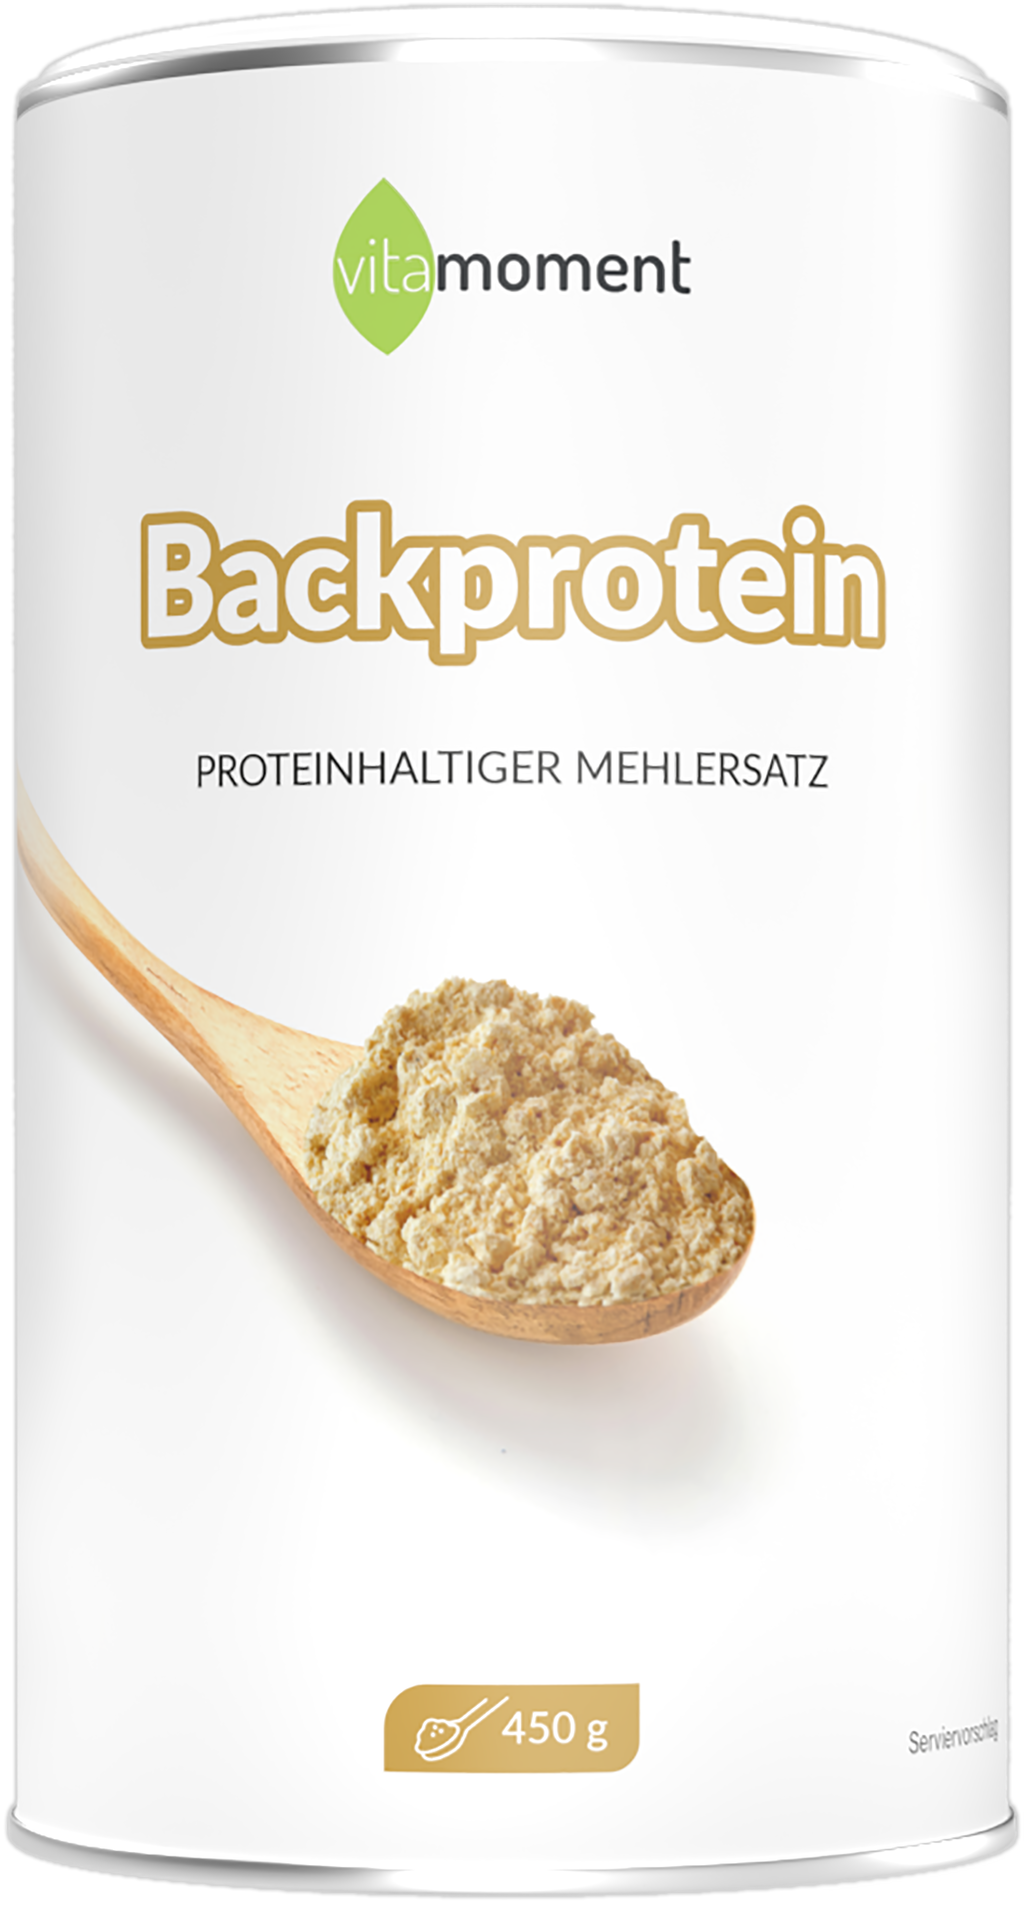 Backprotein - 1 Dose - VitaMoment Produkt